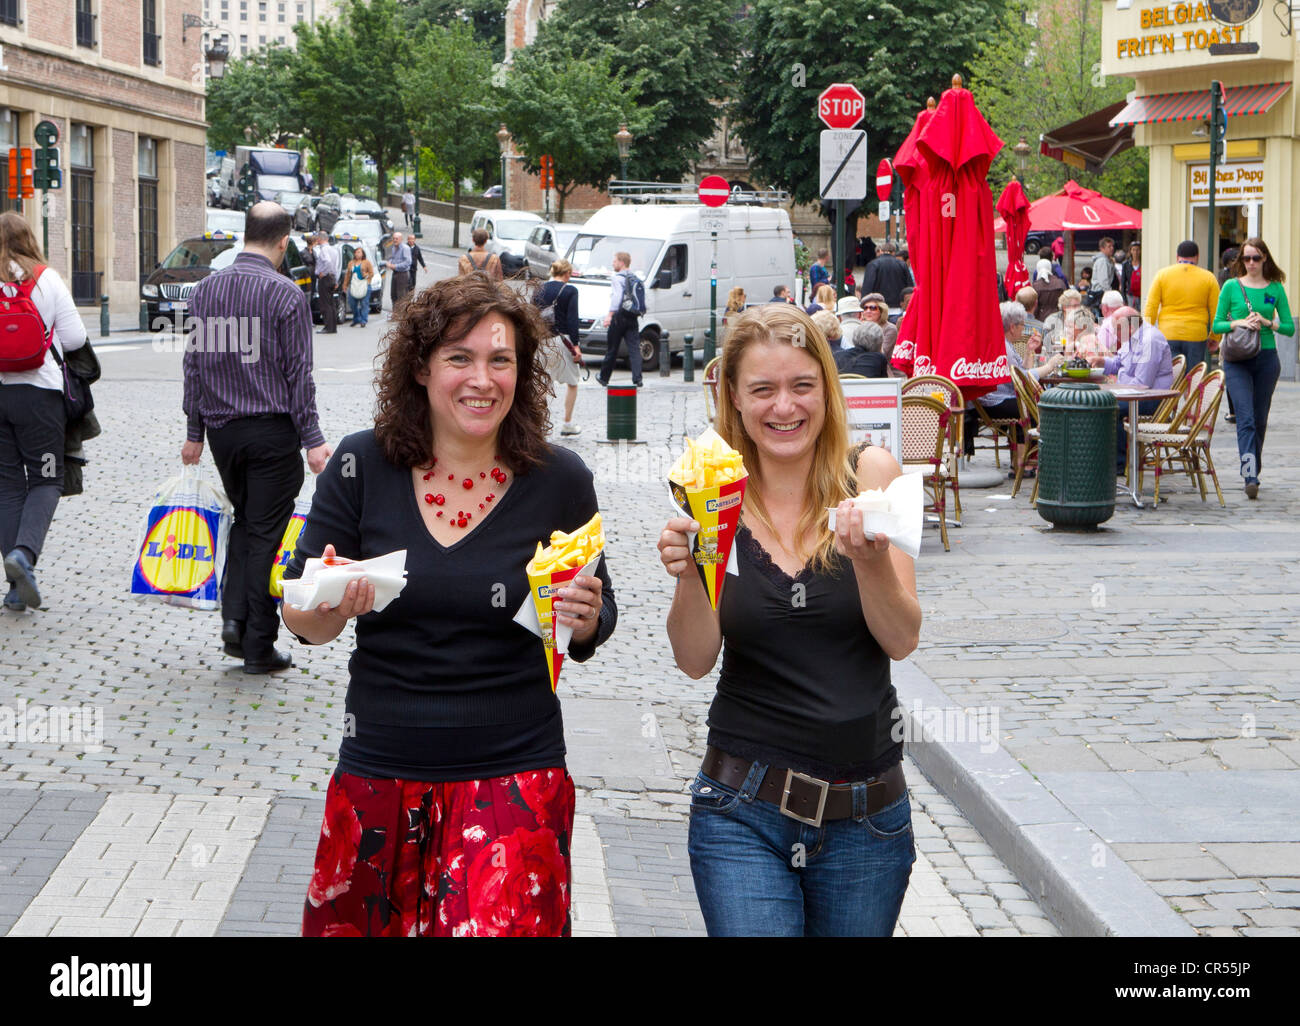 Patatine fritte in Belgio frites bruxelles donna donne ragazza ragazze femmine femmina street snack food sorriso sorridente 2 due Foto Stock